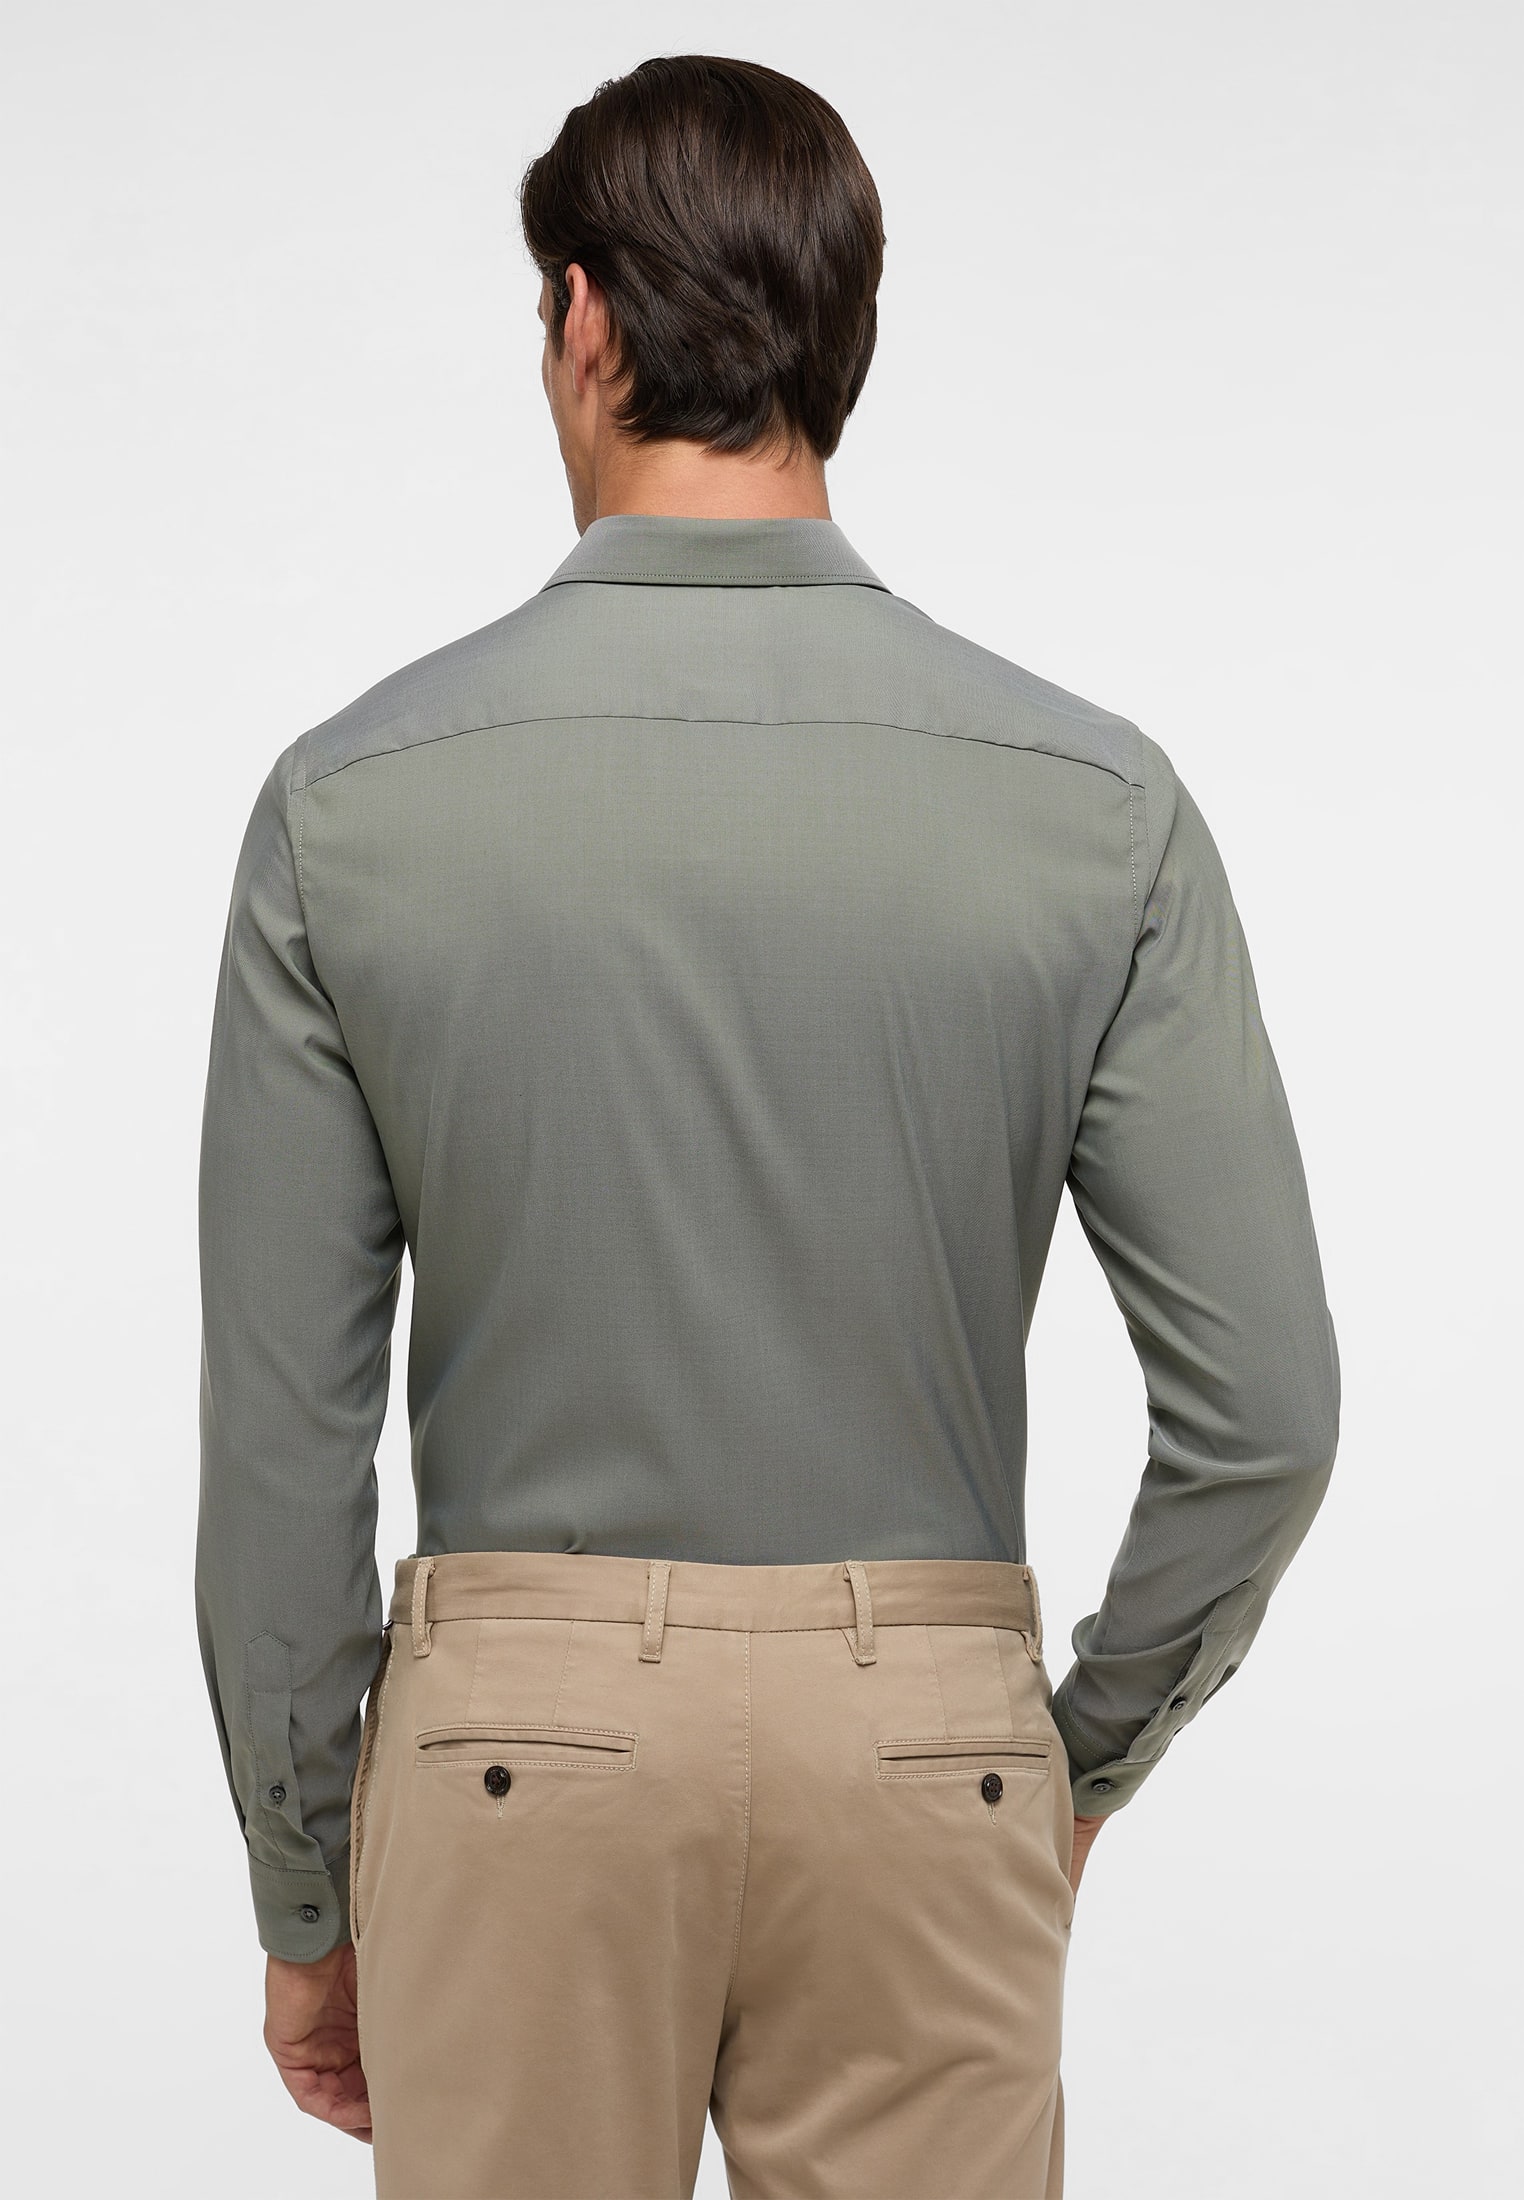 SLIM FIT Performance Shirt in khaki unifarben | khaki | 41 | Langarm |  1SH02217-04-52-41-1/1